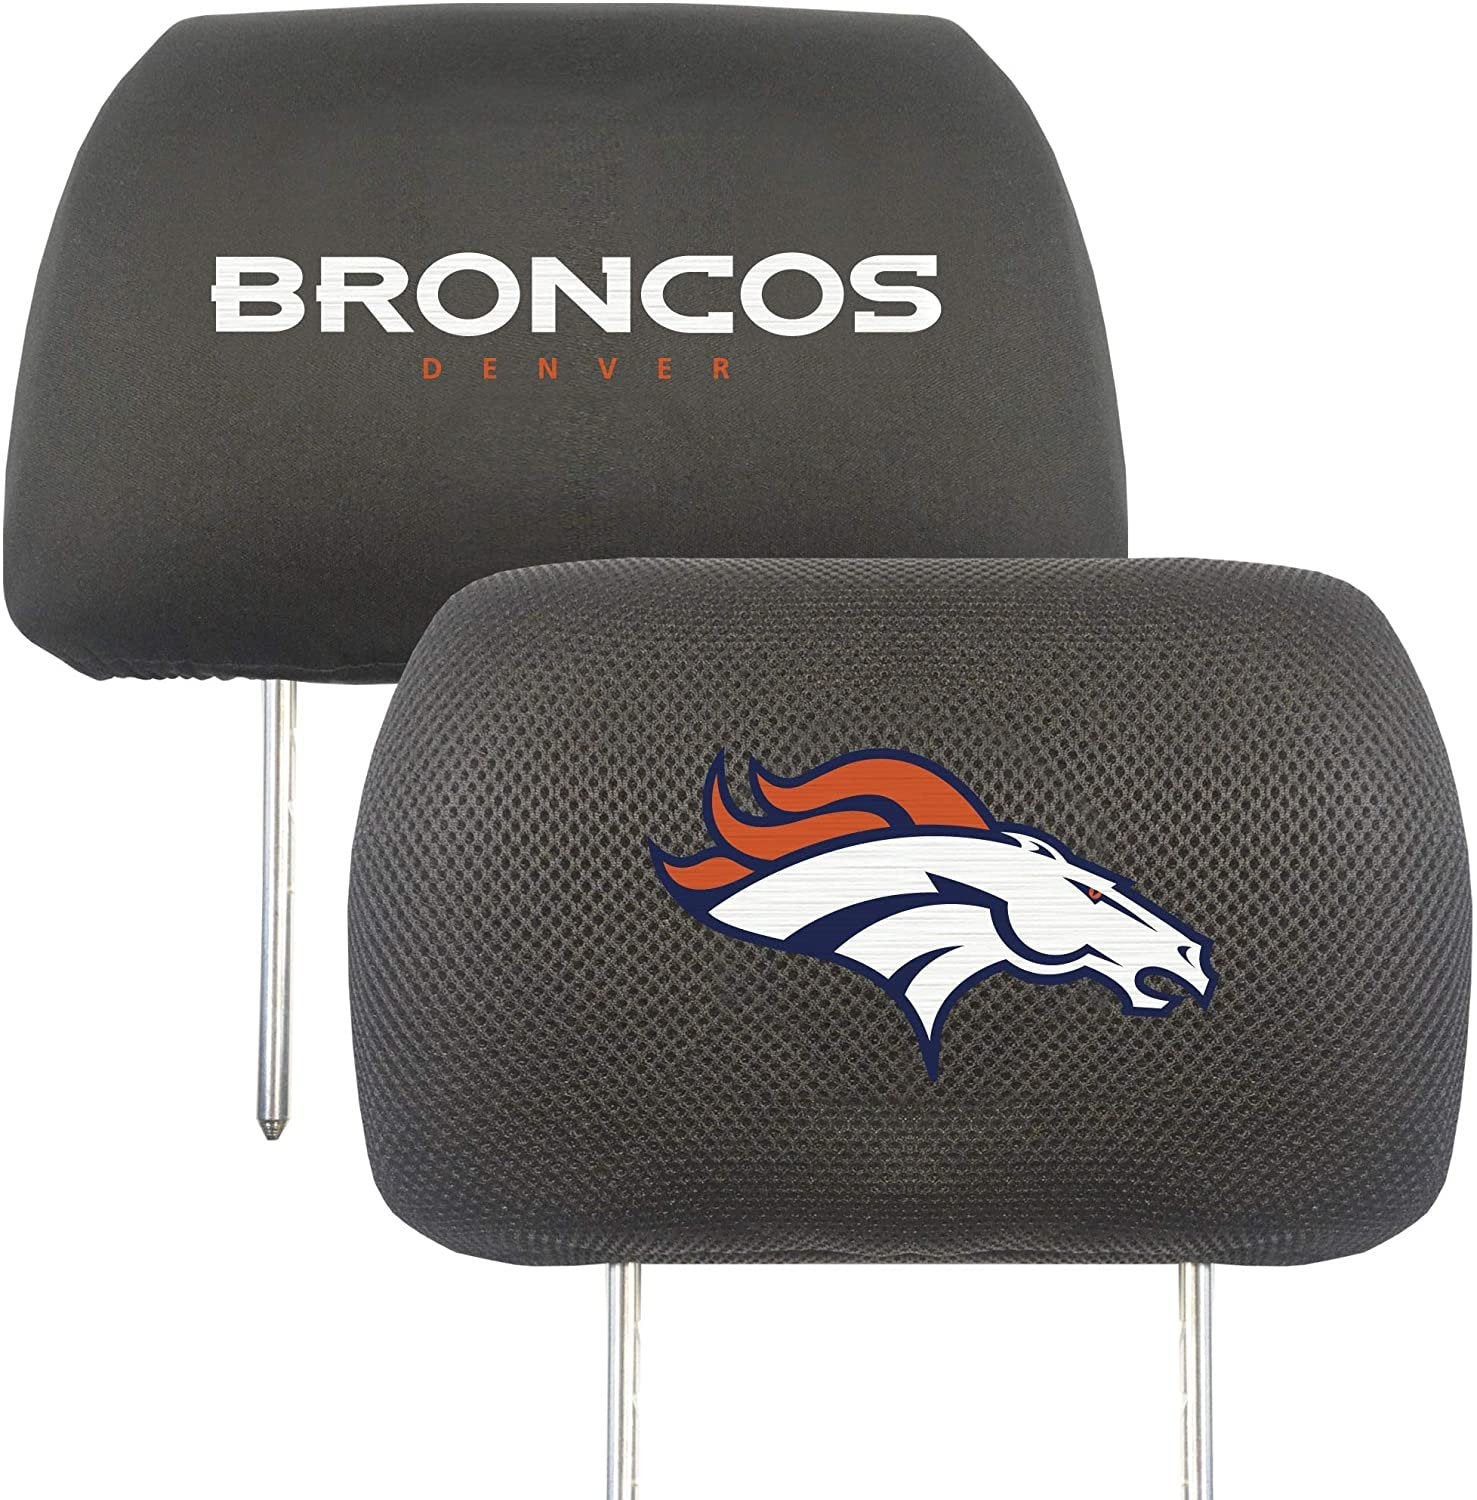 Denver Broncos Pair of Premium Auto Head Rest Covers, Embroidered, Black Elastic, 14x10 Inch